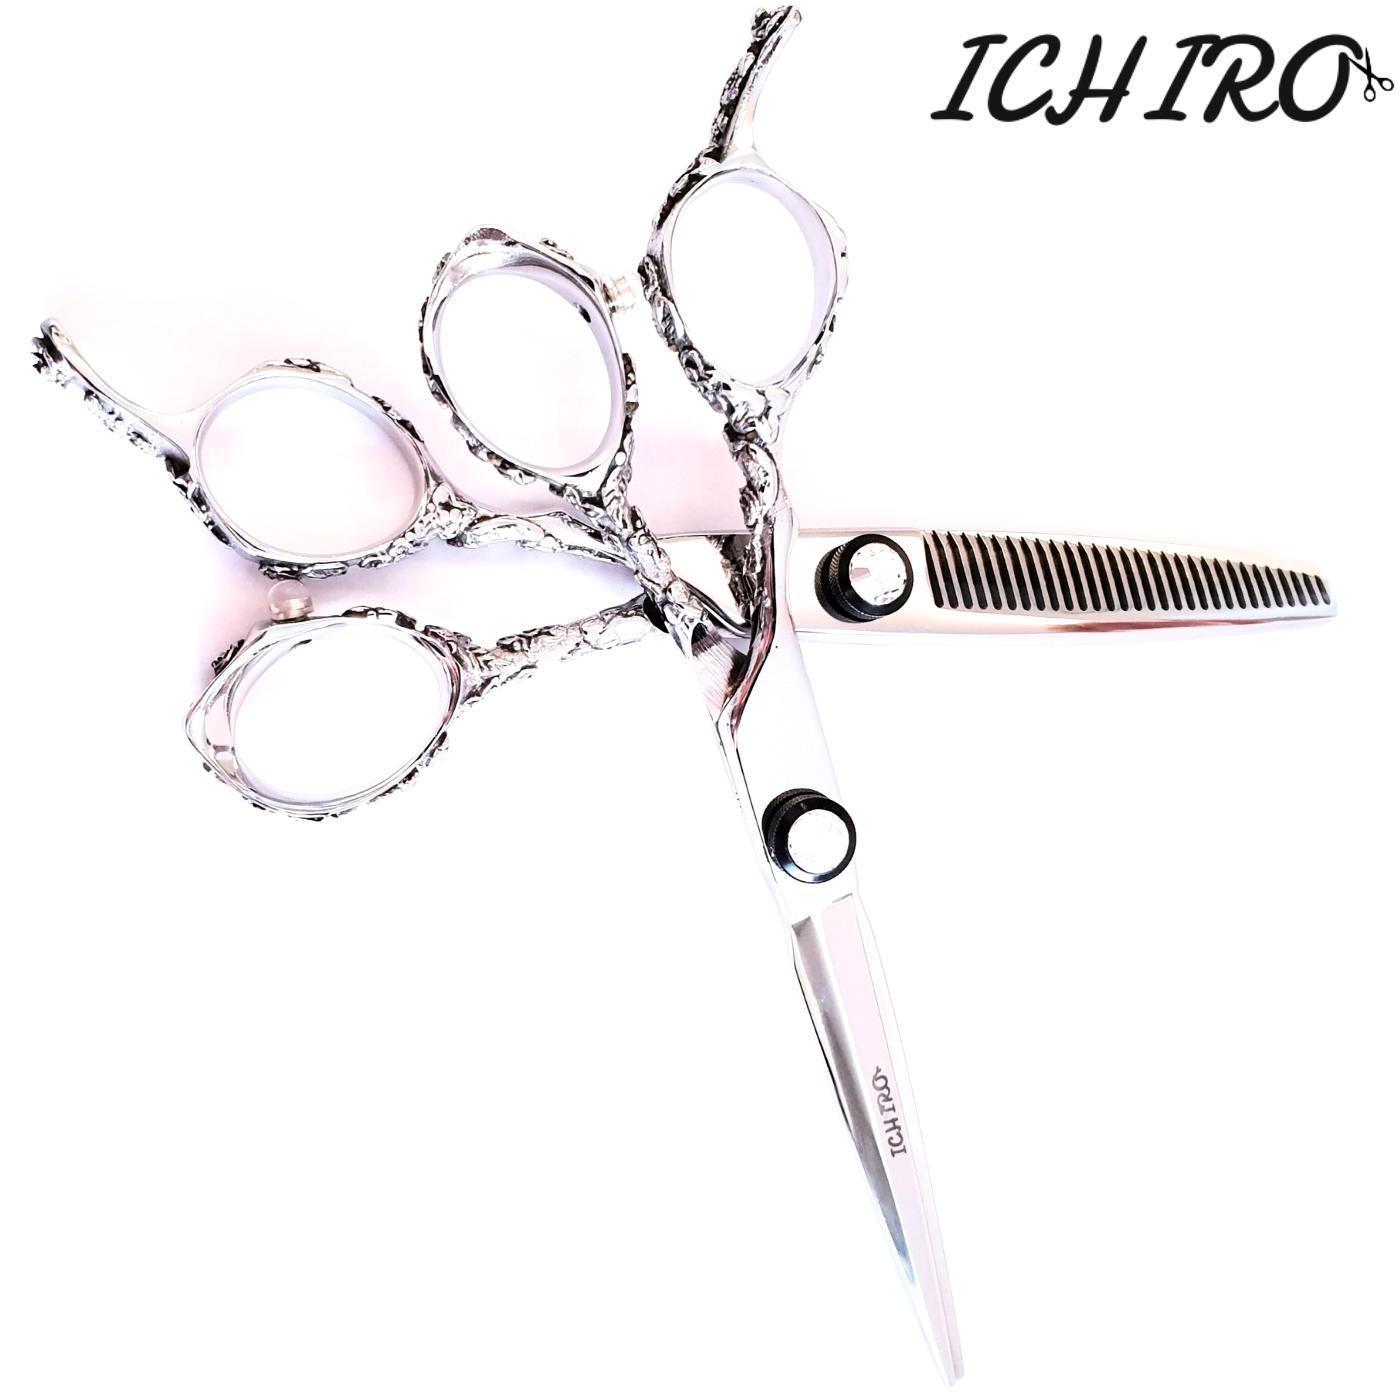 The Ichiro Rose Lefty Hair Scissor Kit